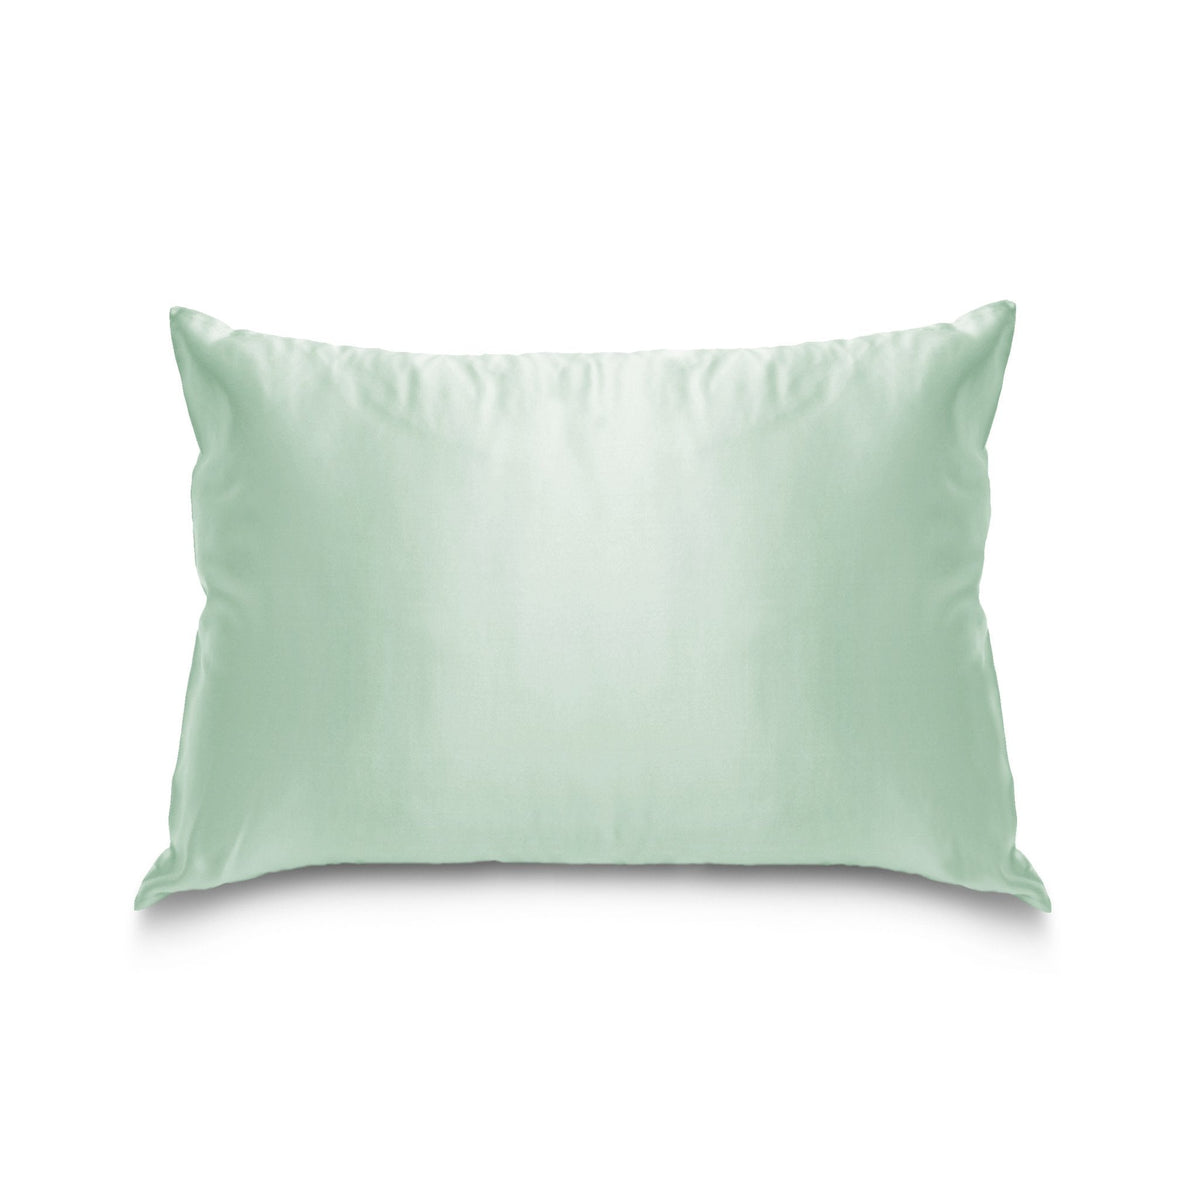 OUTLET Silk Pillowcase for Travel - Green